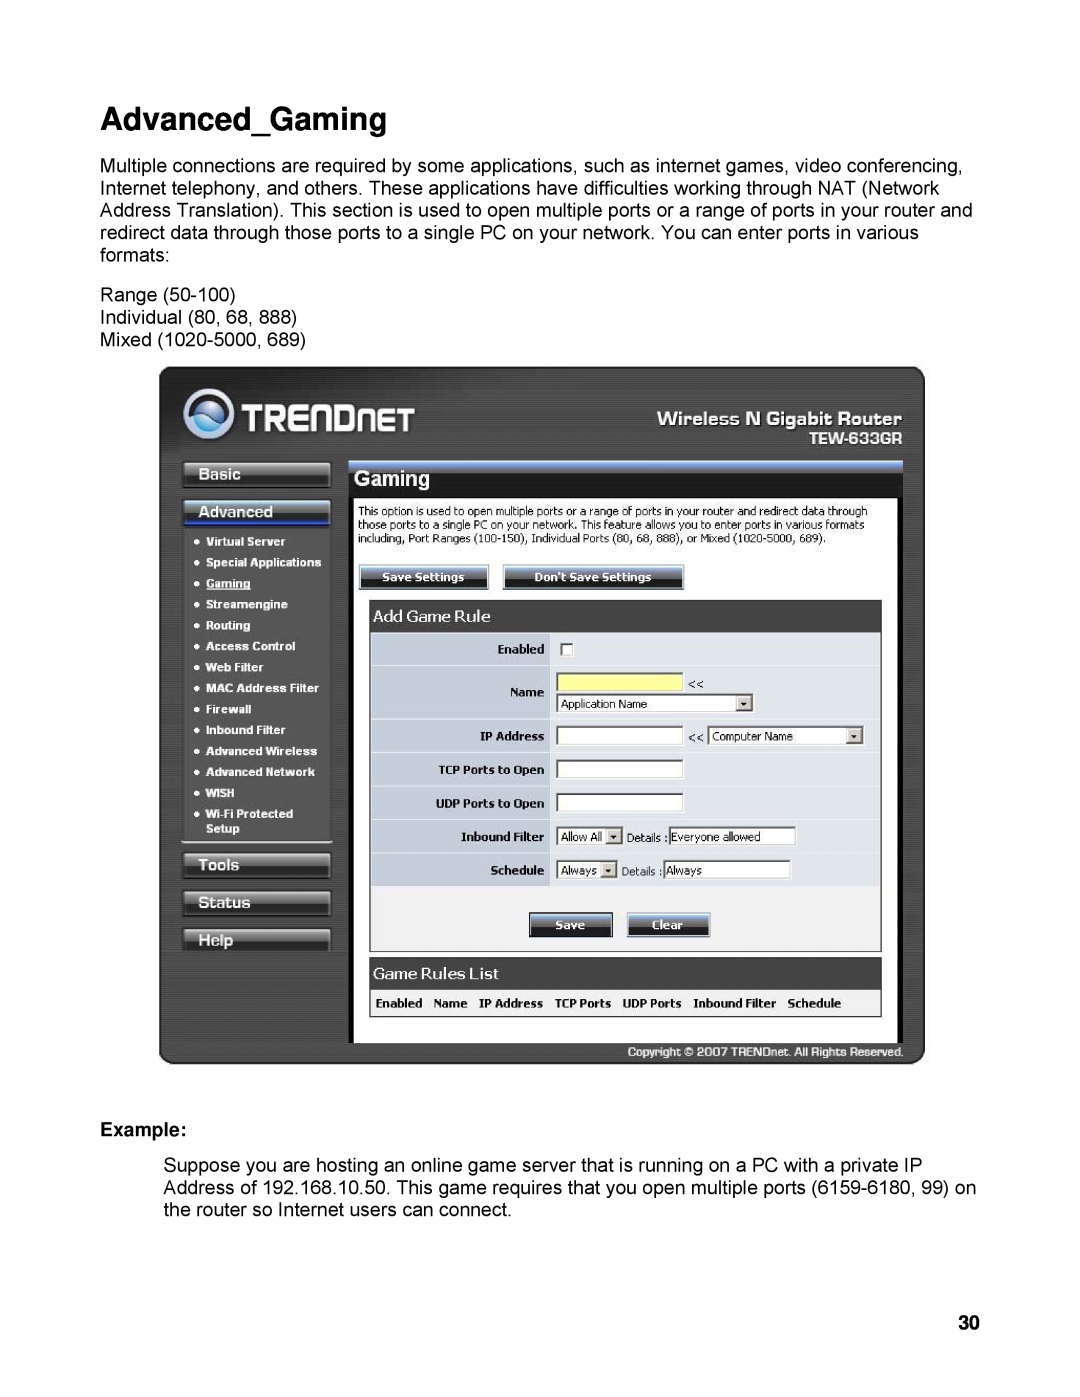 TRENDnet TEW-633GR manual AdvancedGaming, Example 